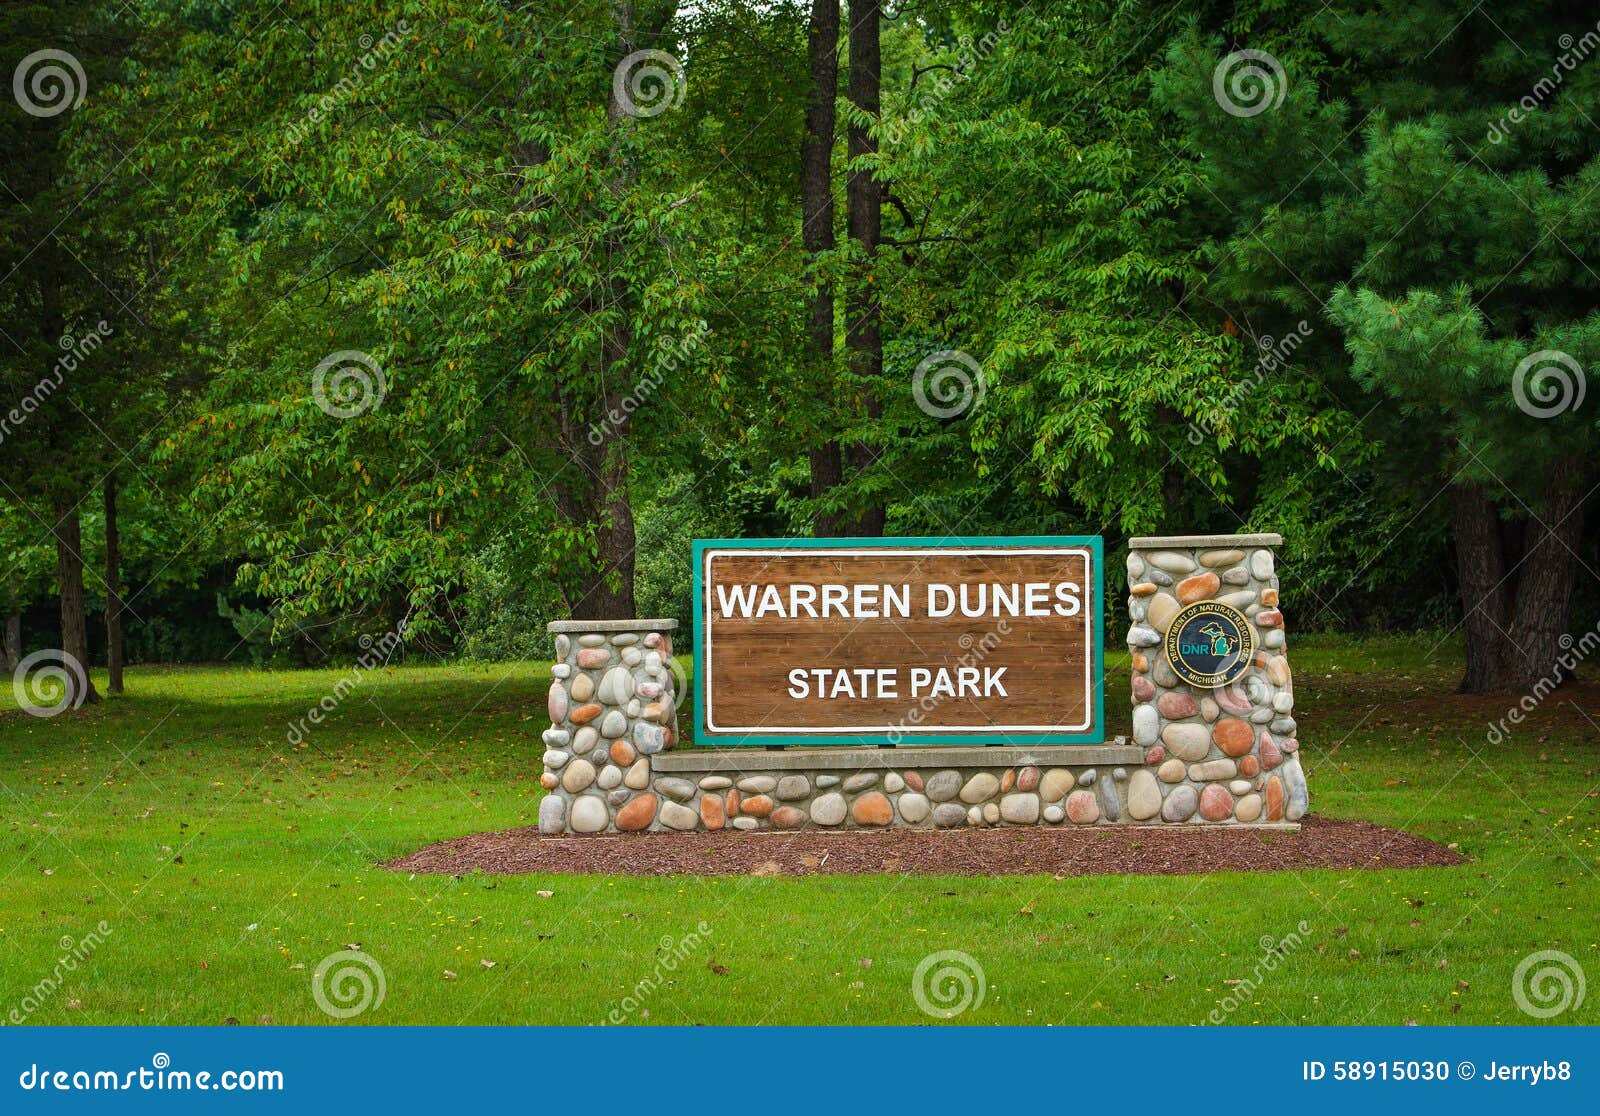 warren dunes state park sign